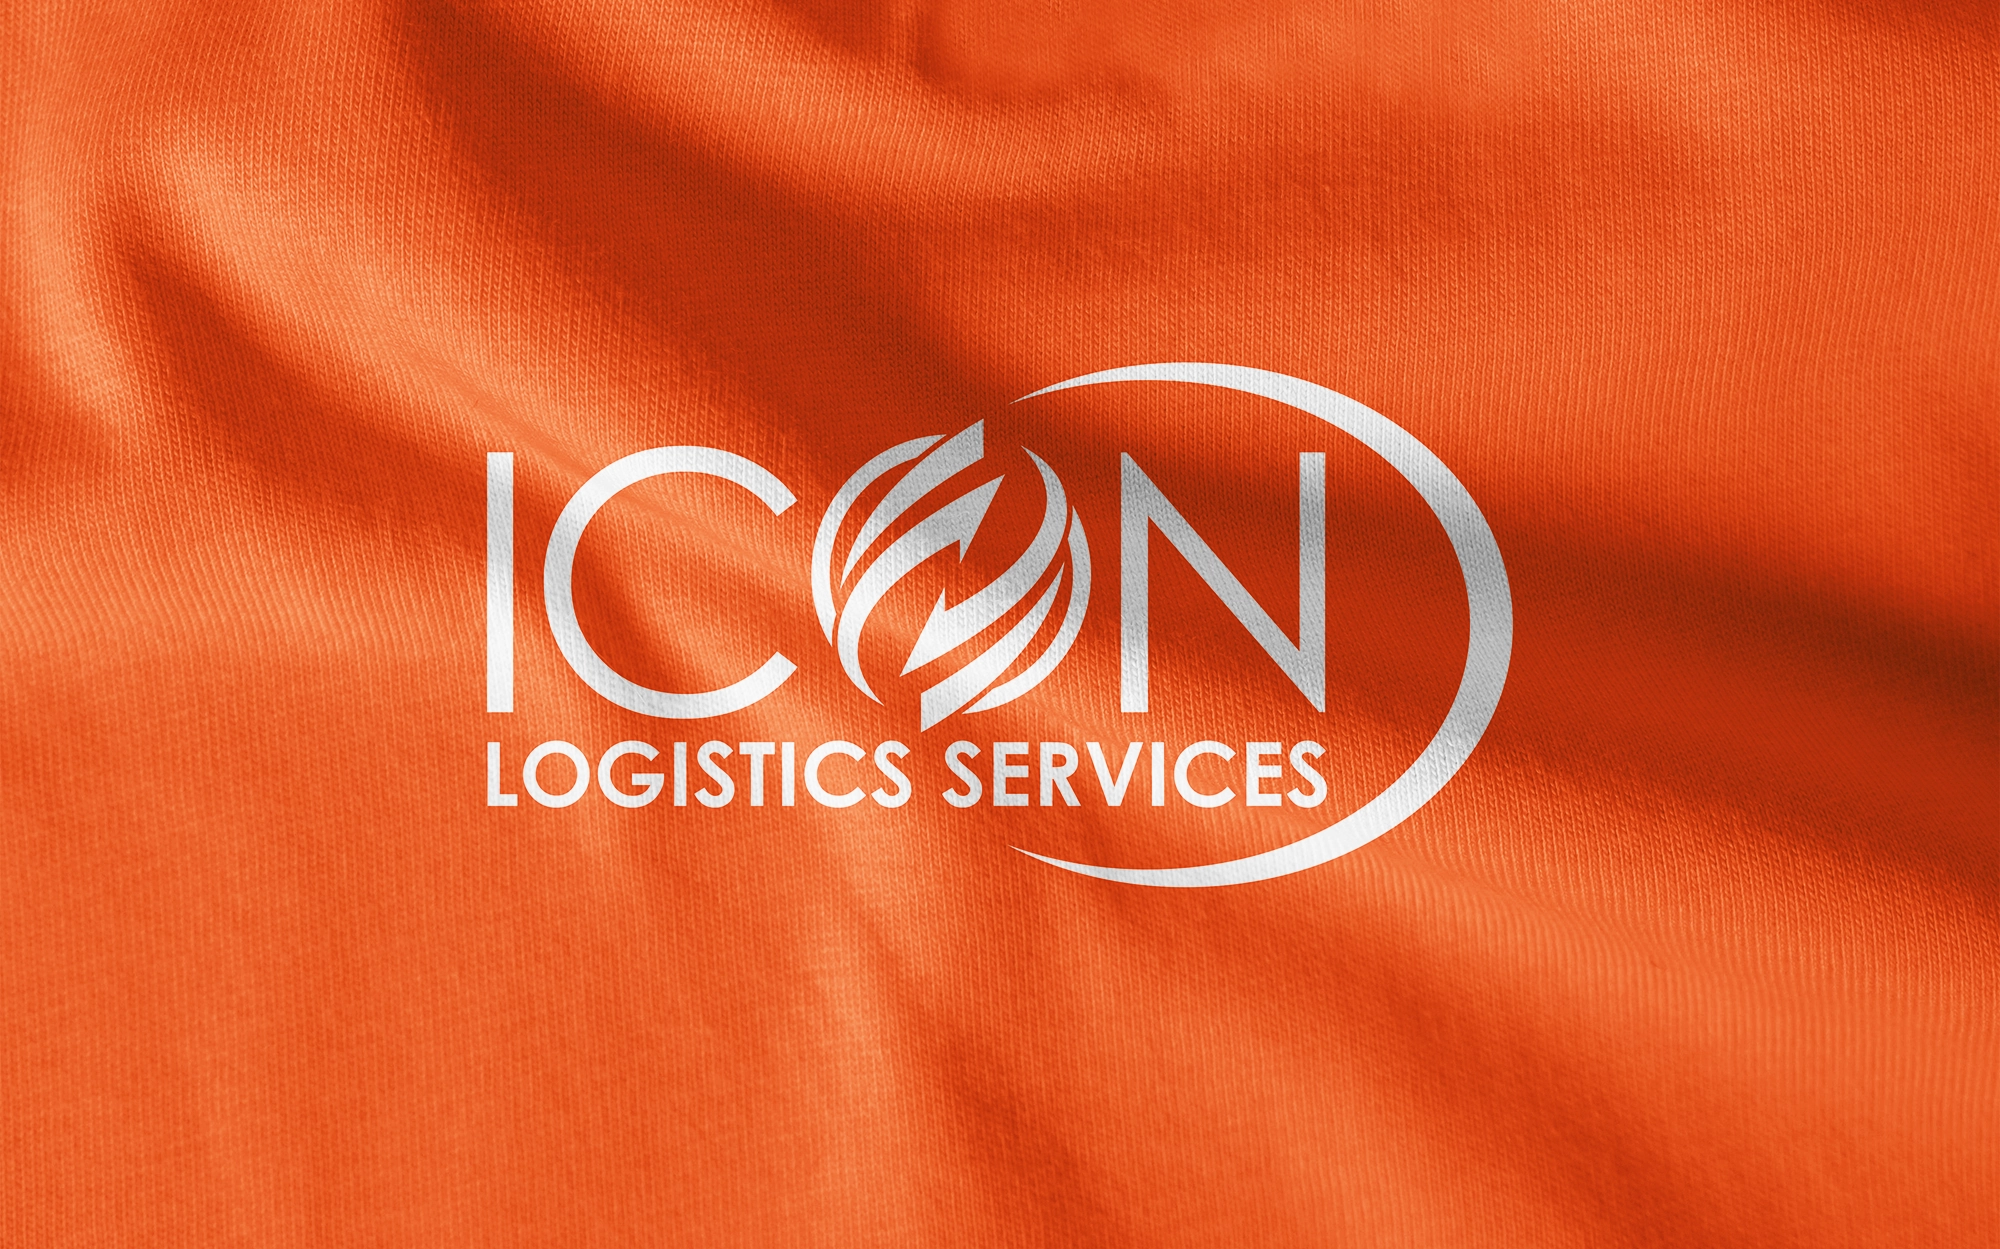 ICON Logistics